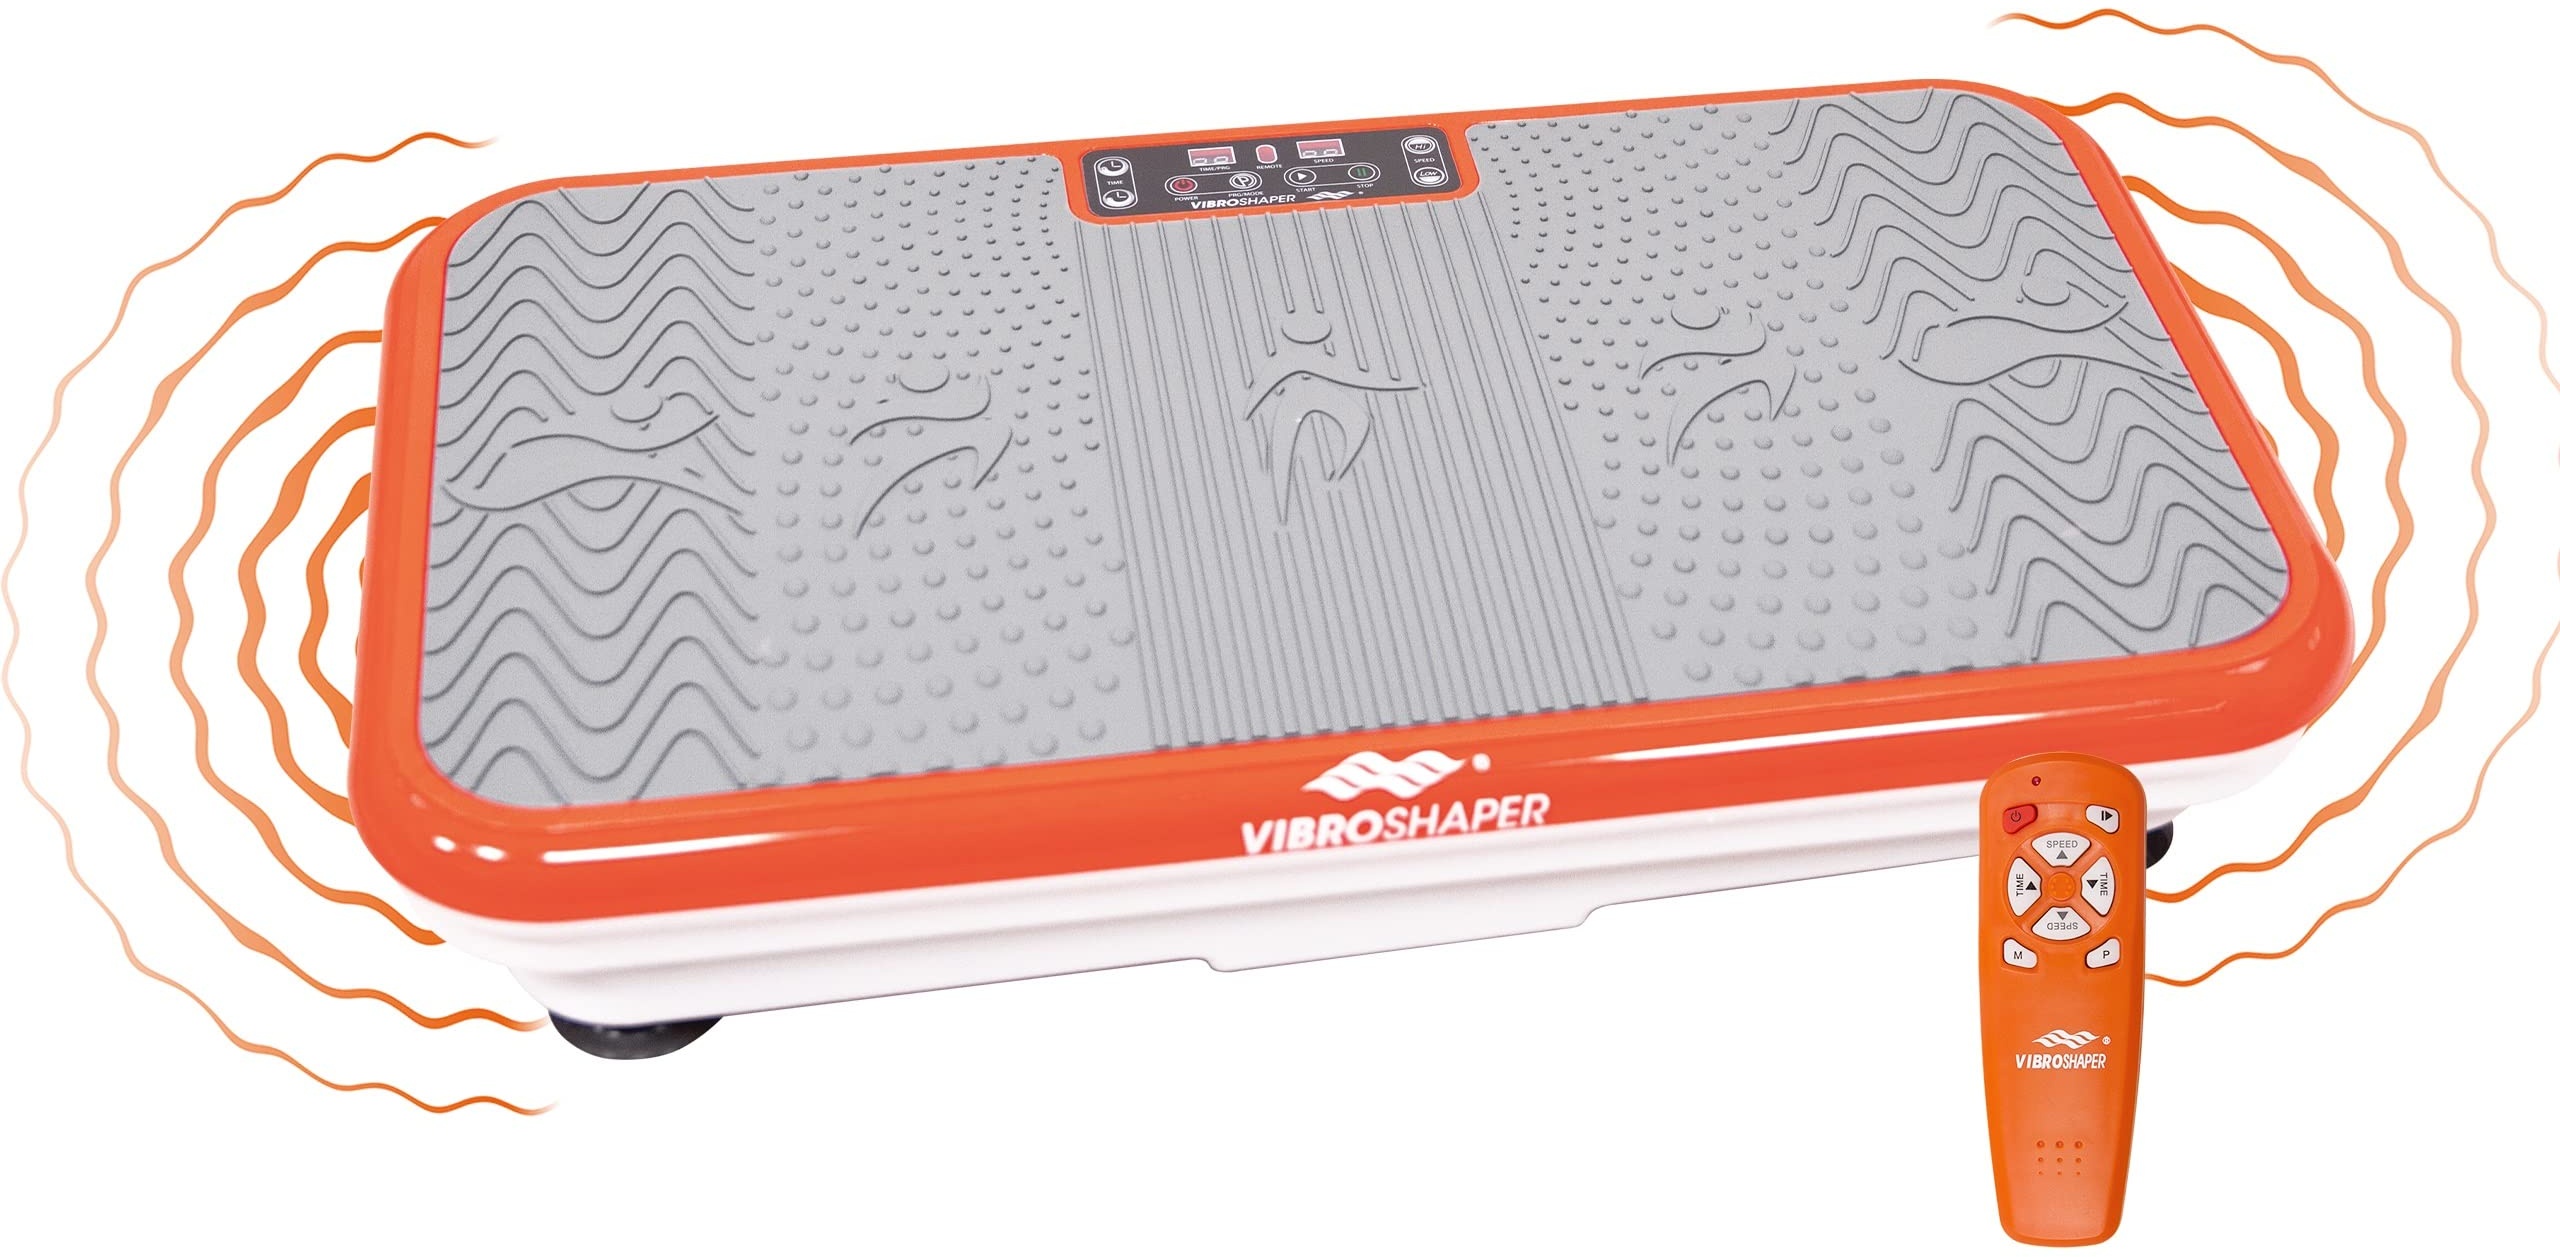 Vibro Shaper - Fitness Vibrationsplatte unterstützt bei Muskelaufbau - Vibrationstrainer für alle Muskelgruppen - Oszillationstechnologie - inklusive Fitnessbänder - orange